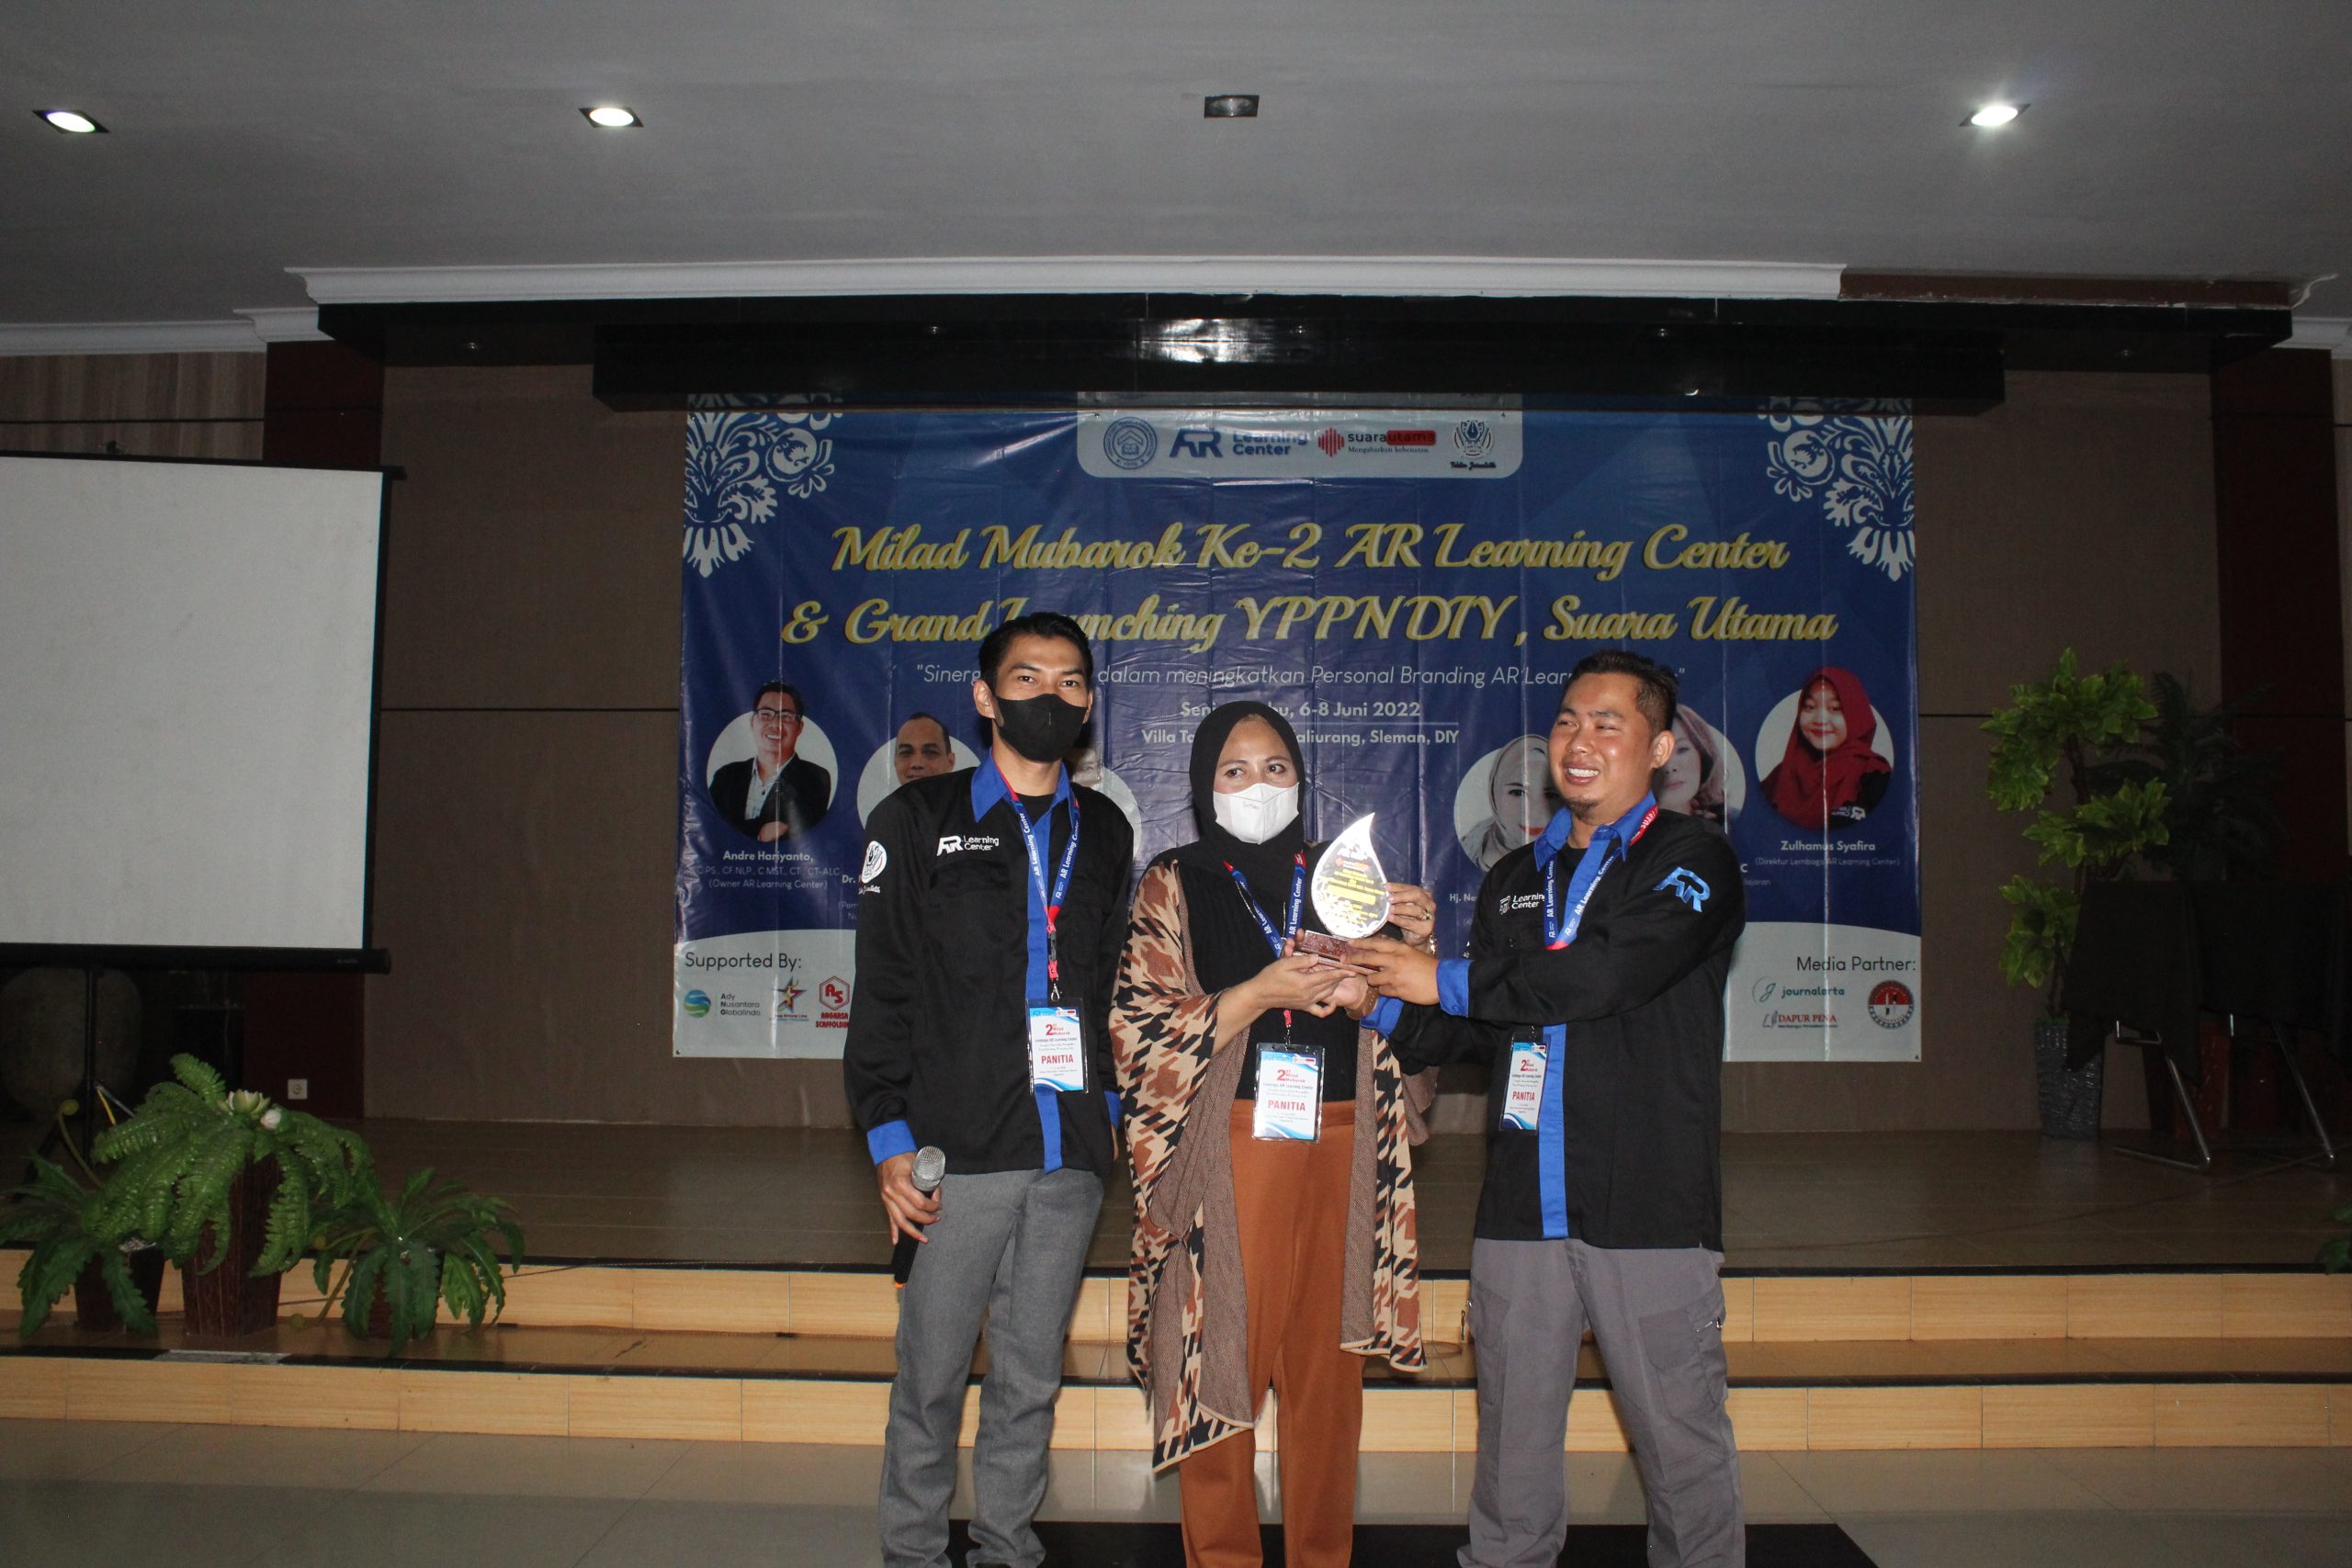 Foto: (Mas Andre Hariyanto dan Tasya). Dr. (c) Hj. Nenden Hendayani Terpilih BEST TRAINER 2022 AR Learning Center. Suara Utama ID